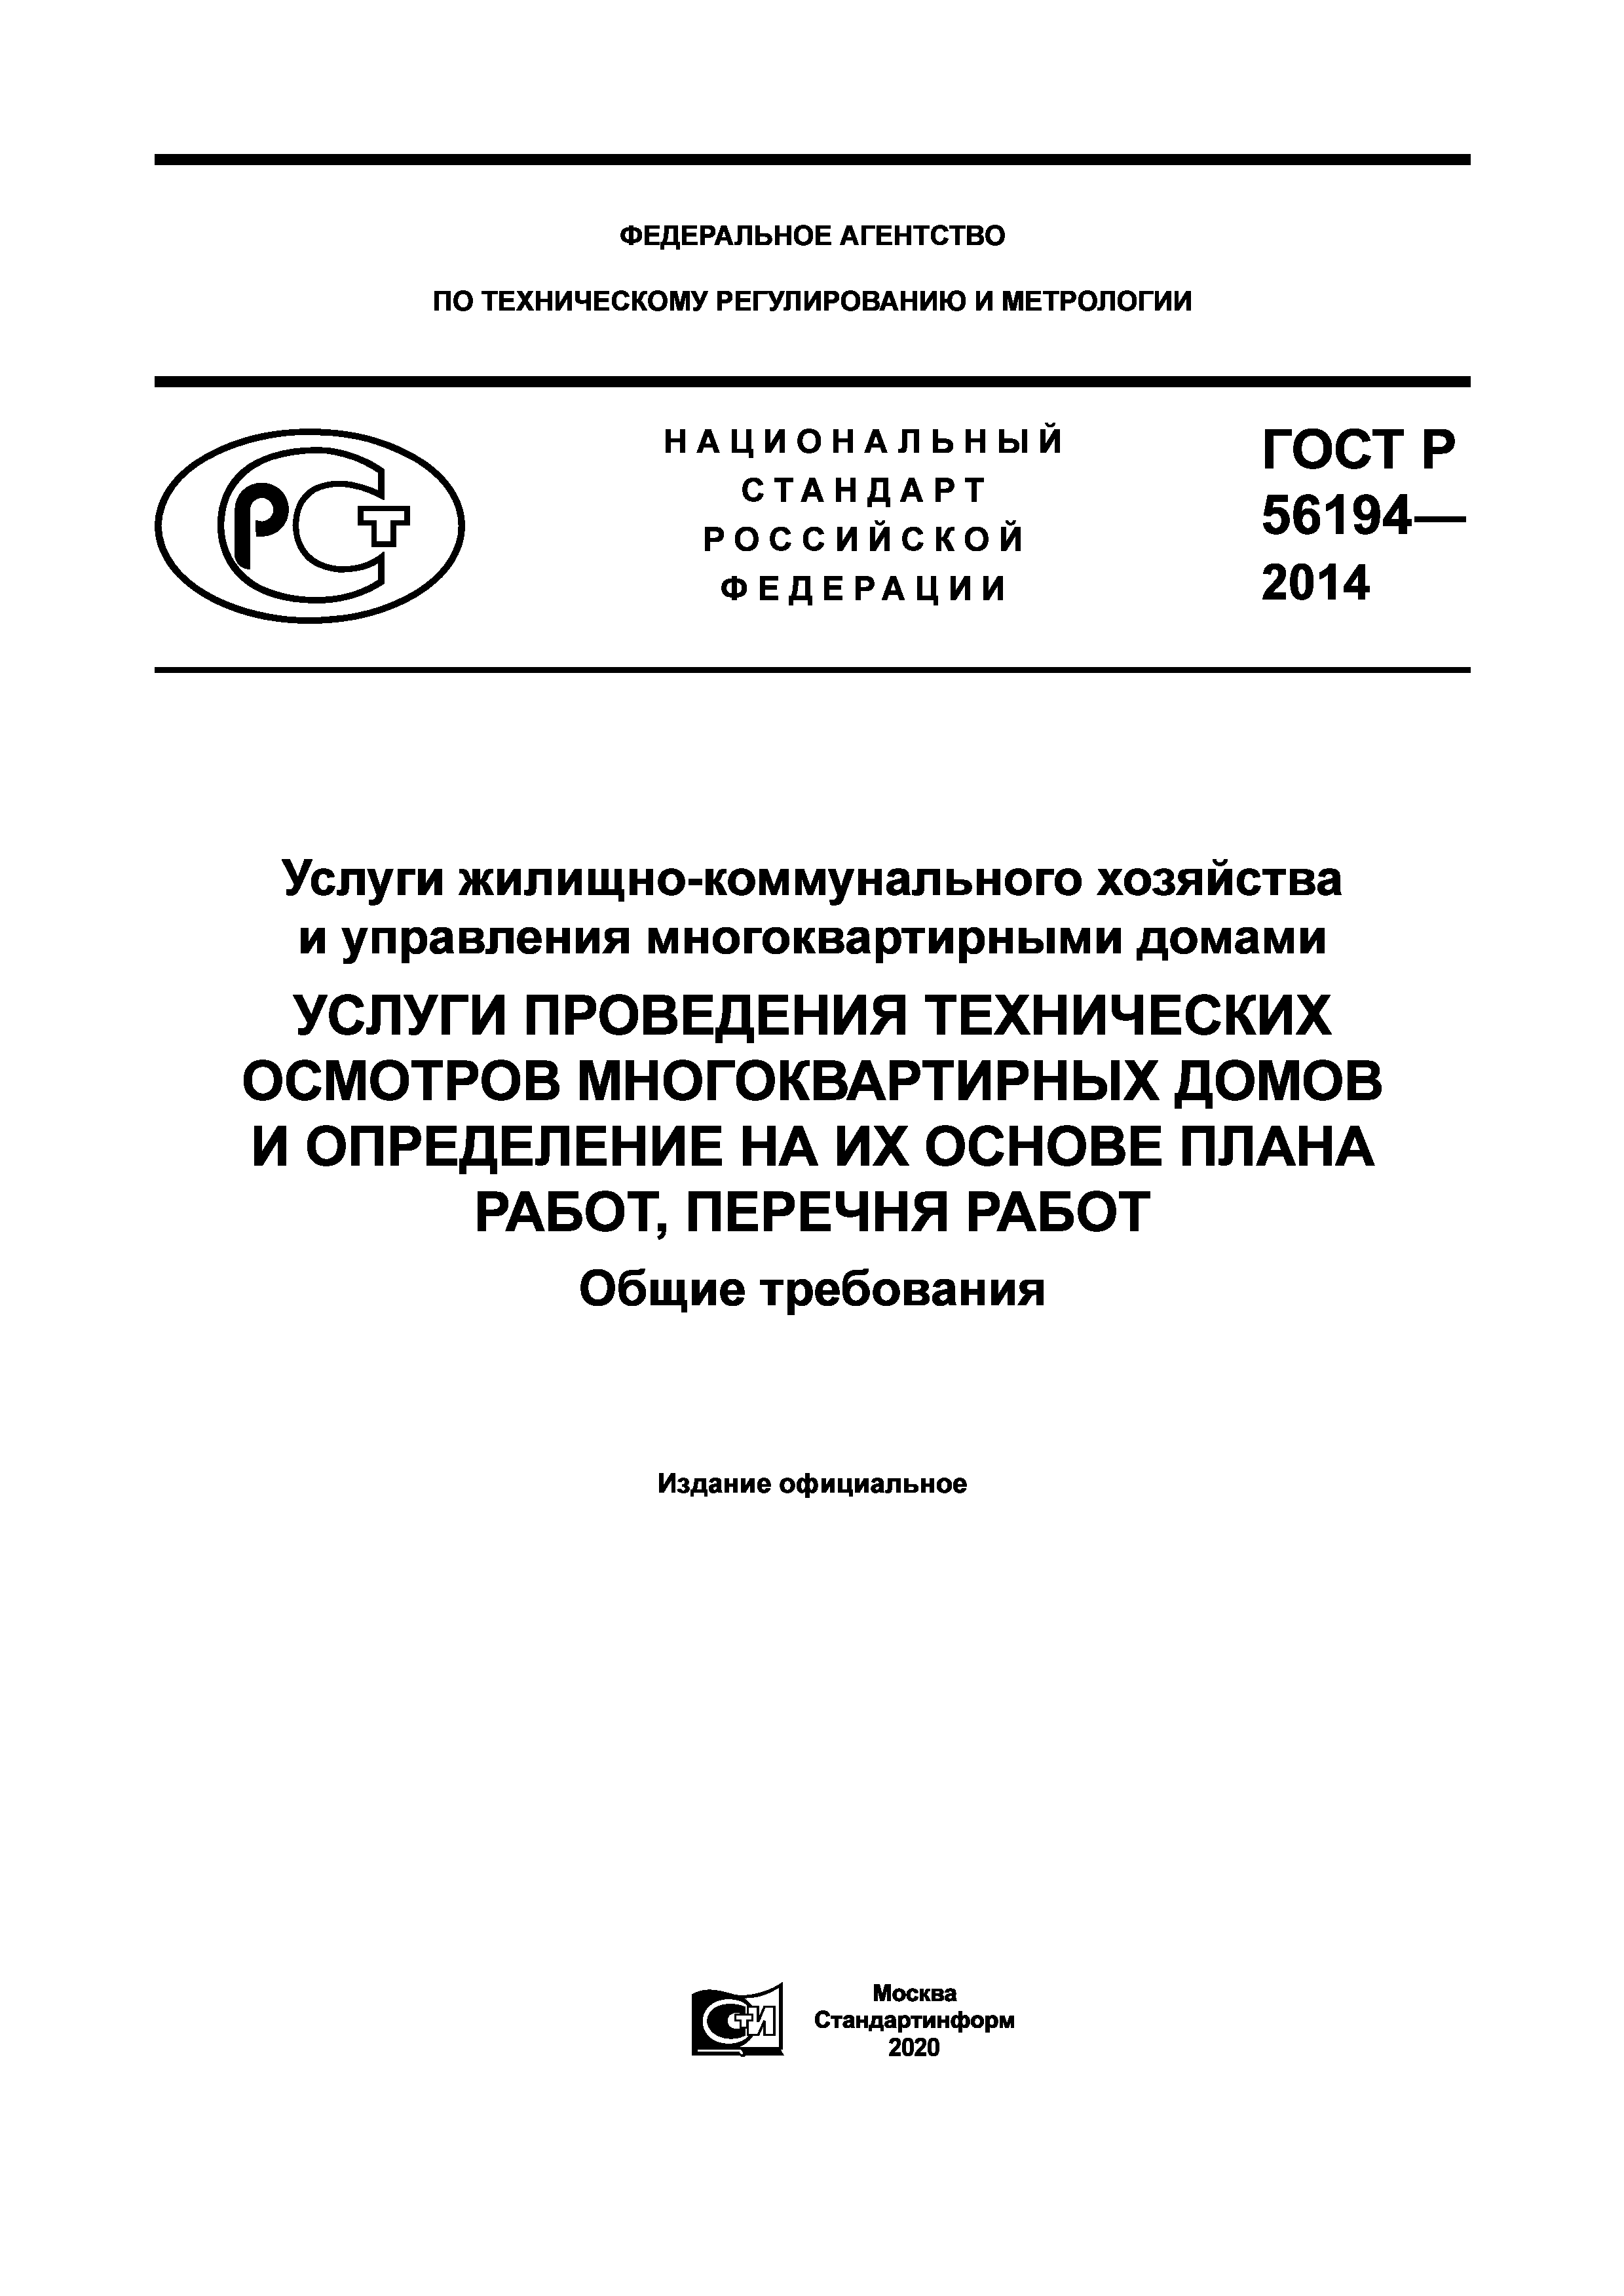 ГОСТ Р 56194-2014